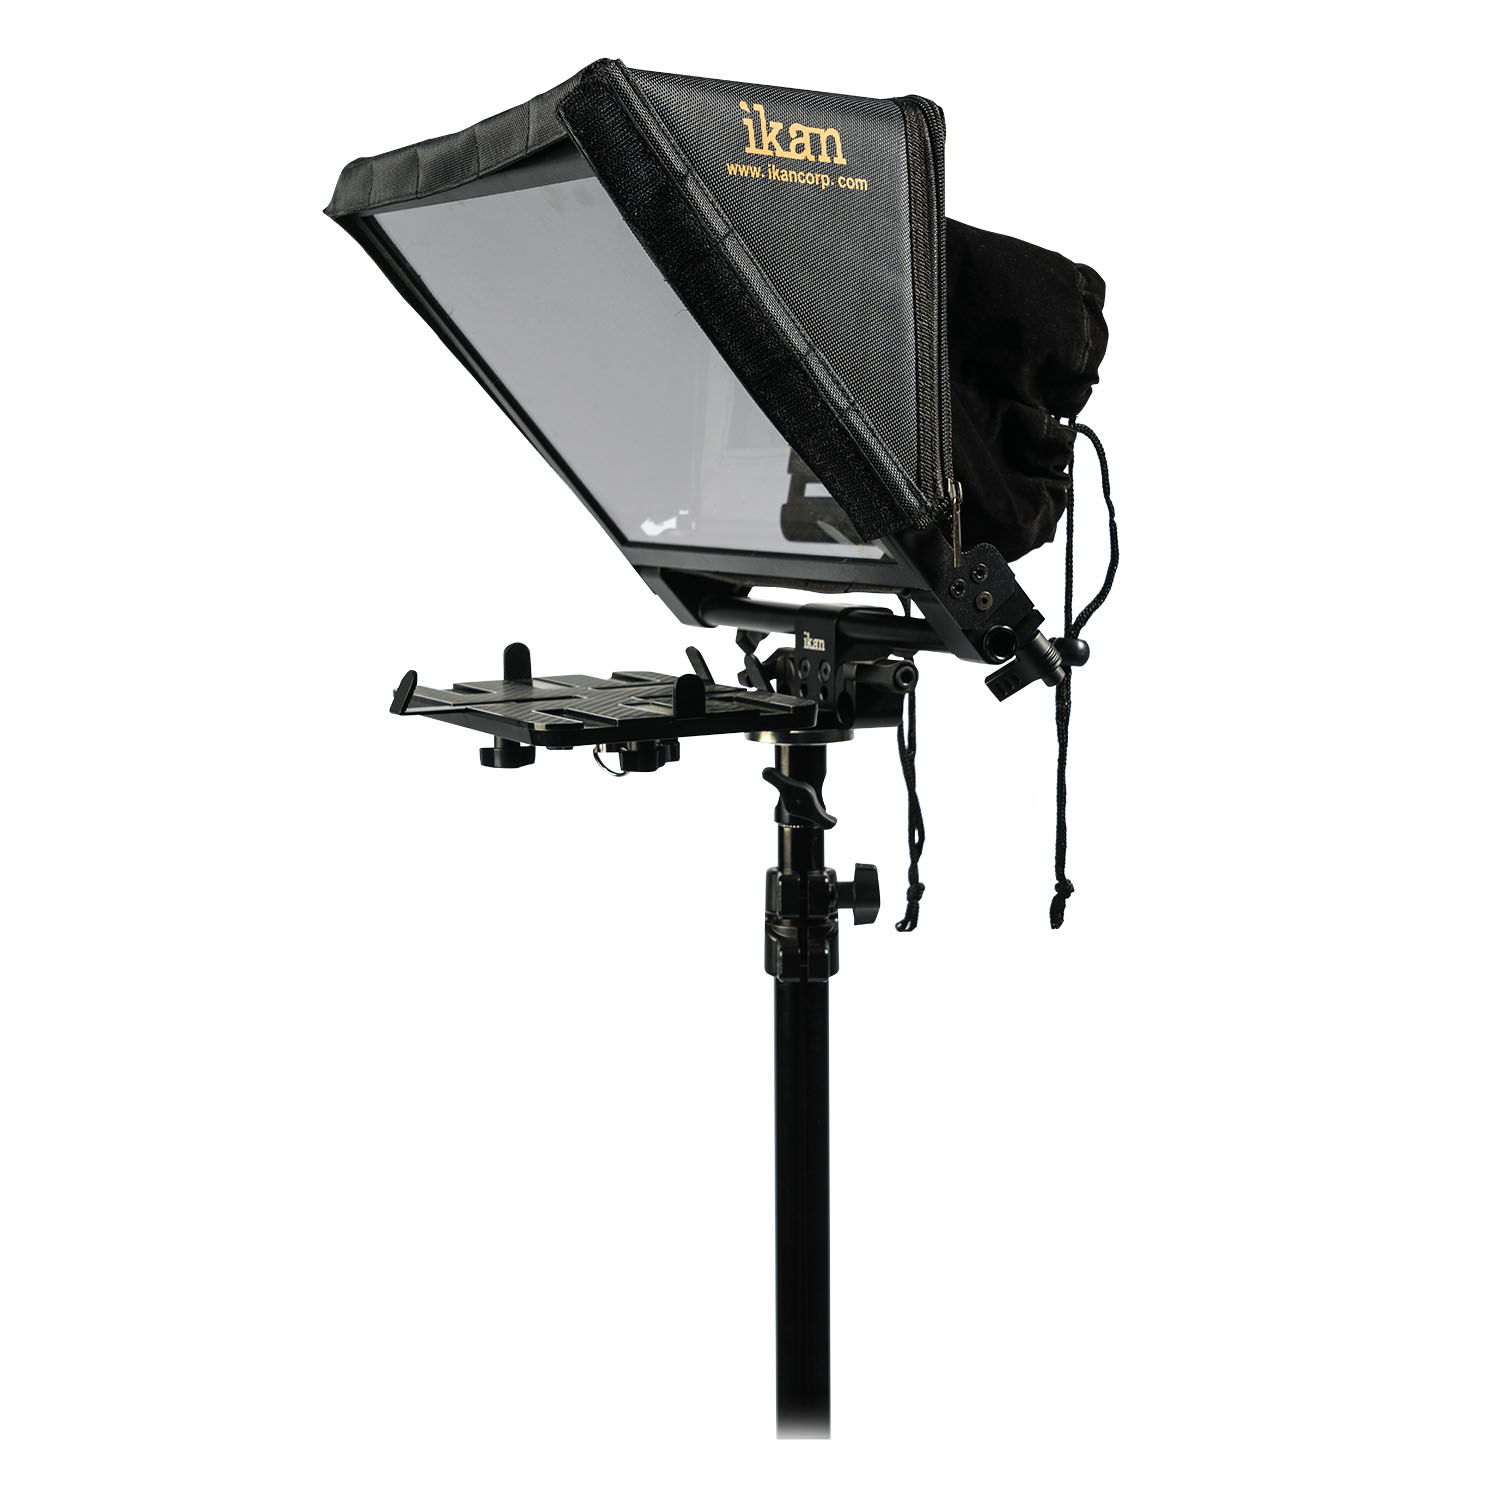 ikan Elite Tablet & iPad Light Stand Teleprompter